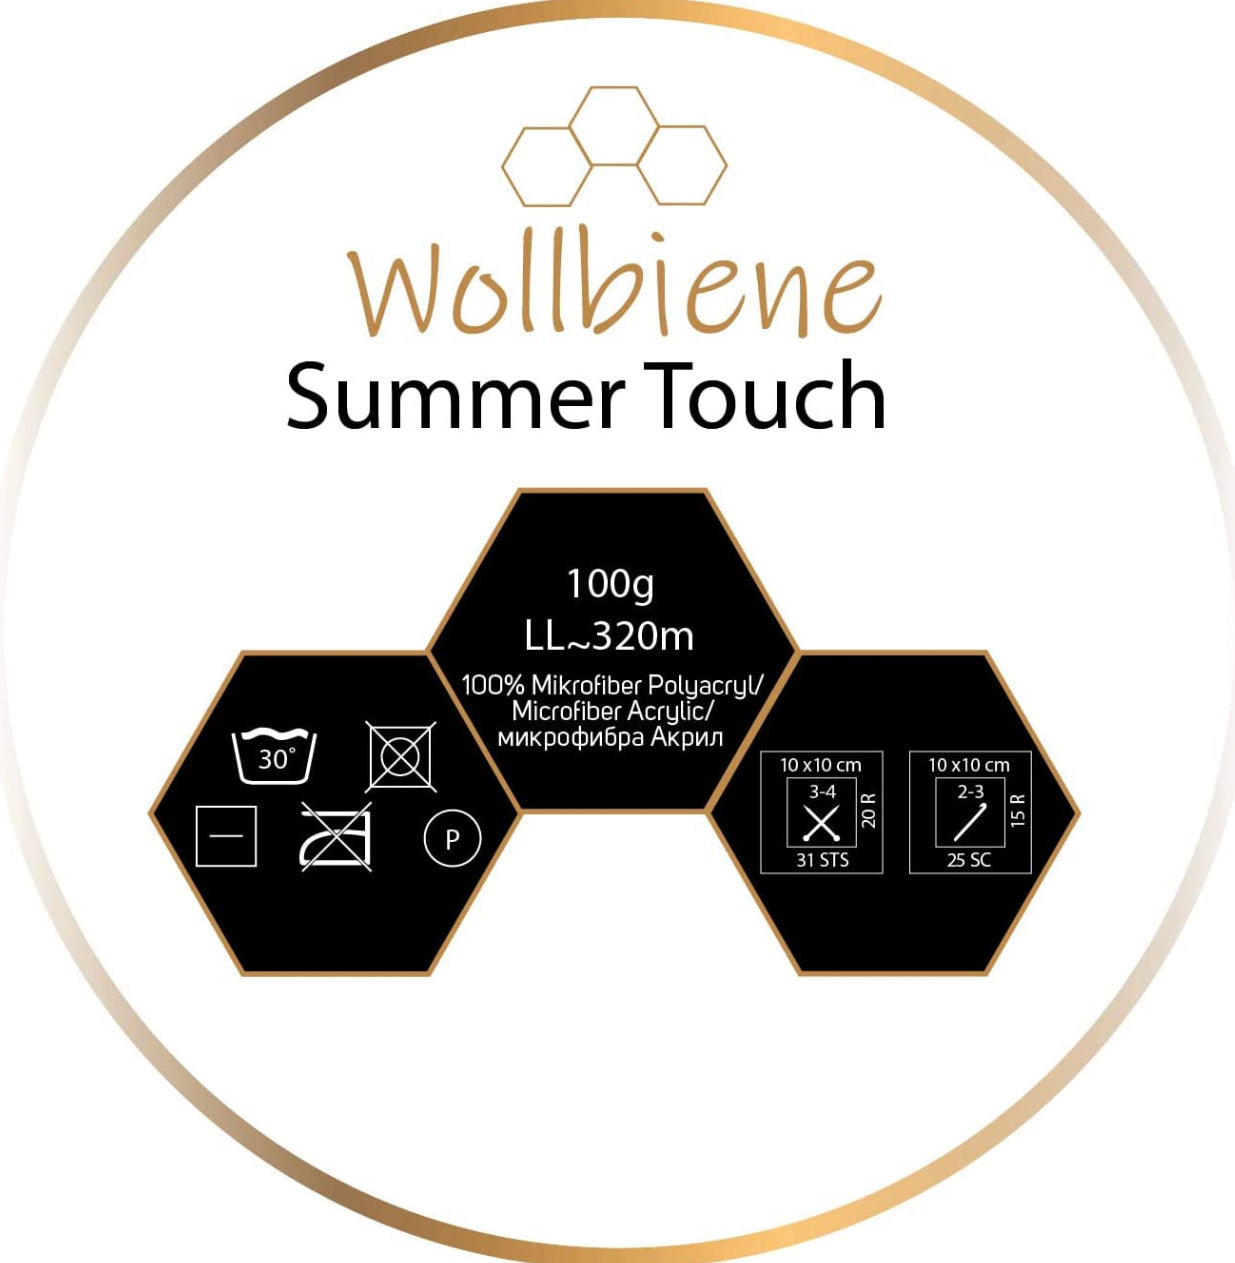 Wollbiene Summer Touch - 500